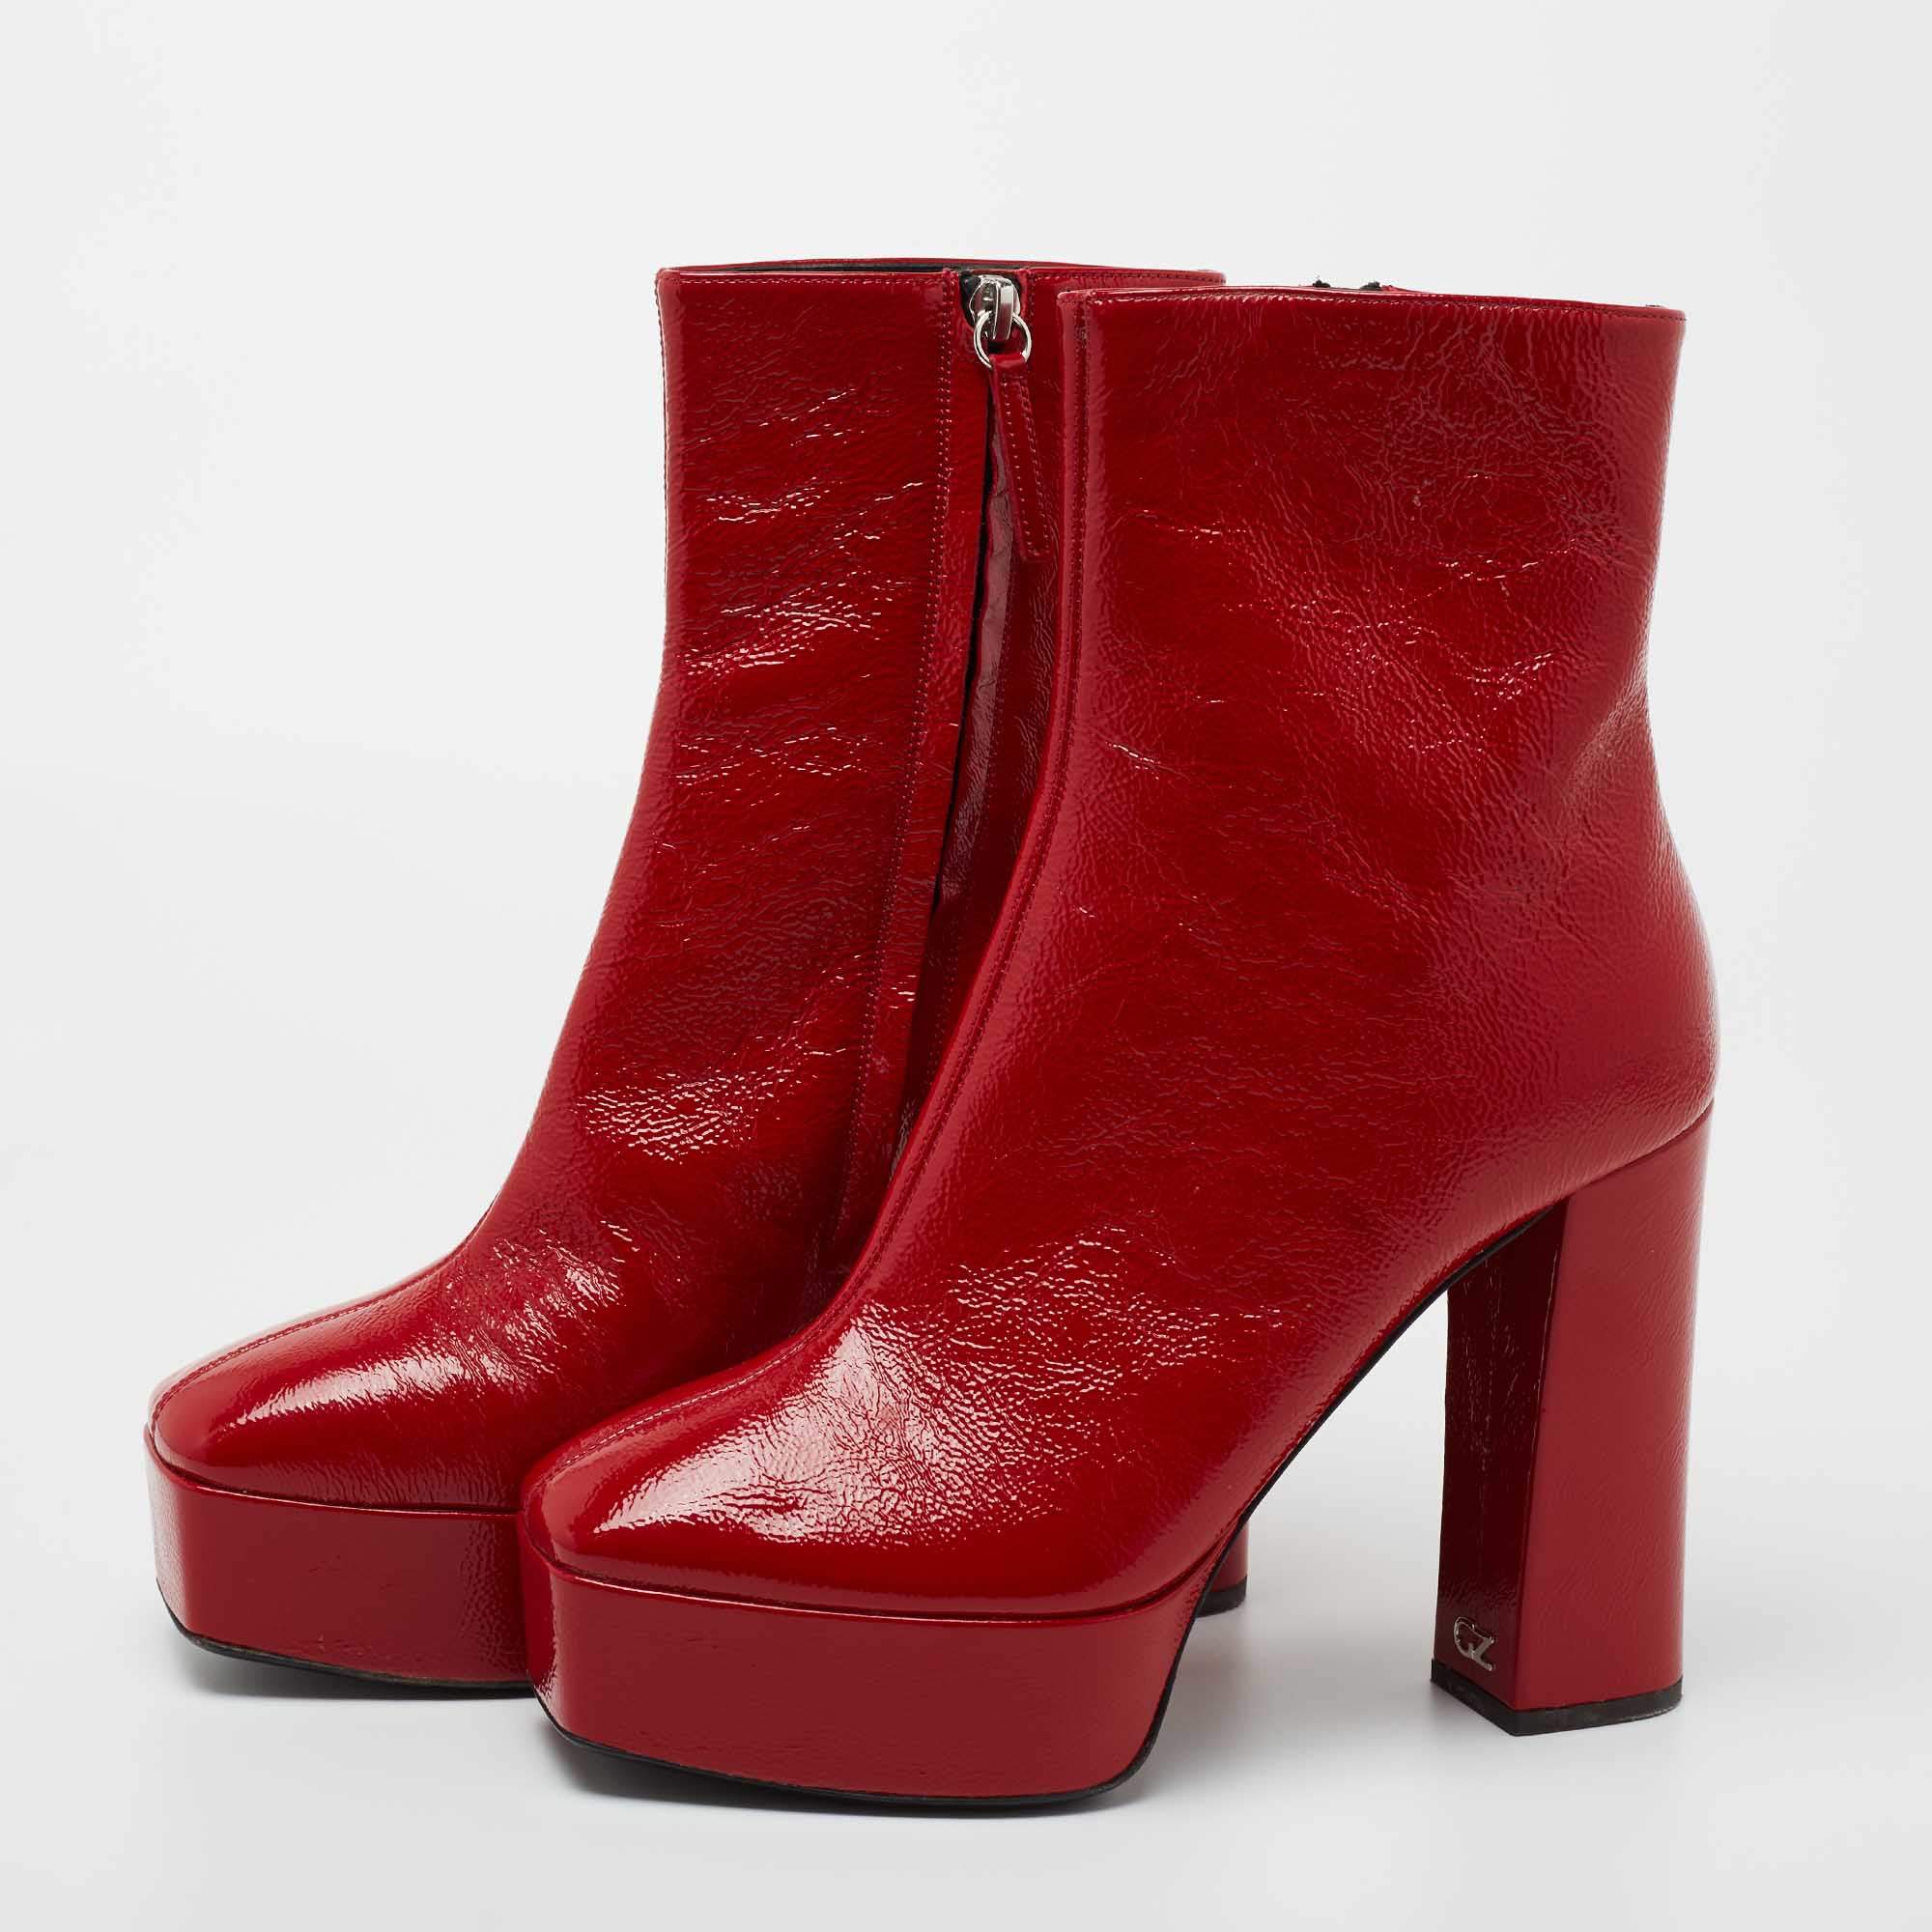 Giuseppe Zanotti Red Leather Square Toe Ankle Boots Size 39 Giuseppe Zanotti | TLC